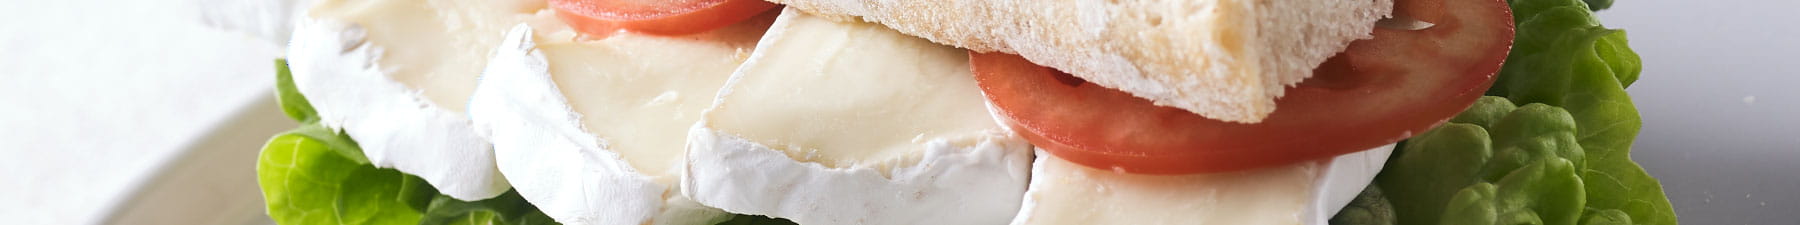 Brie sandwich